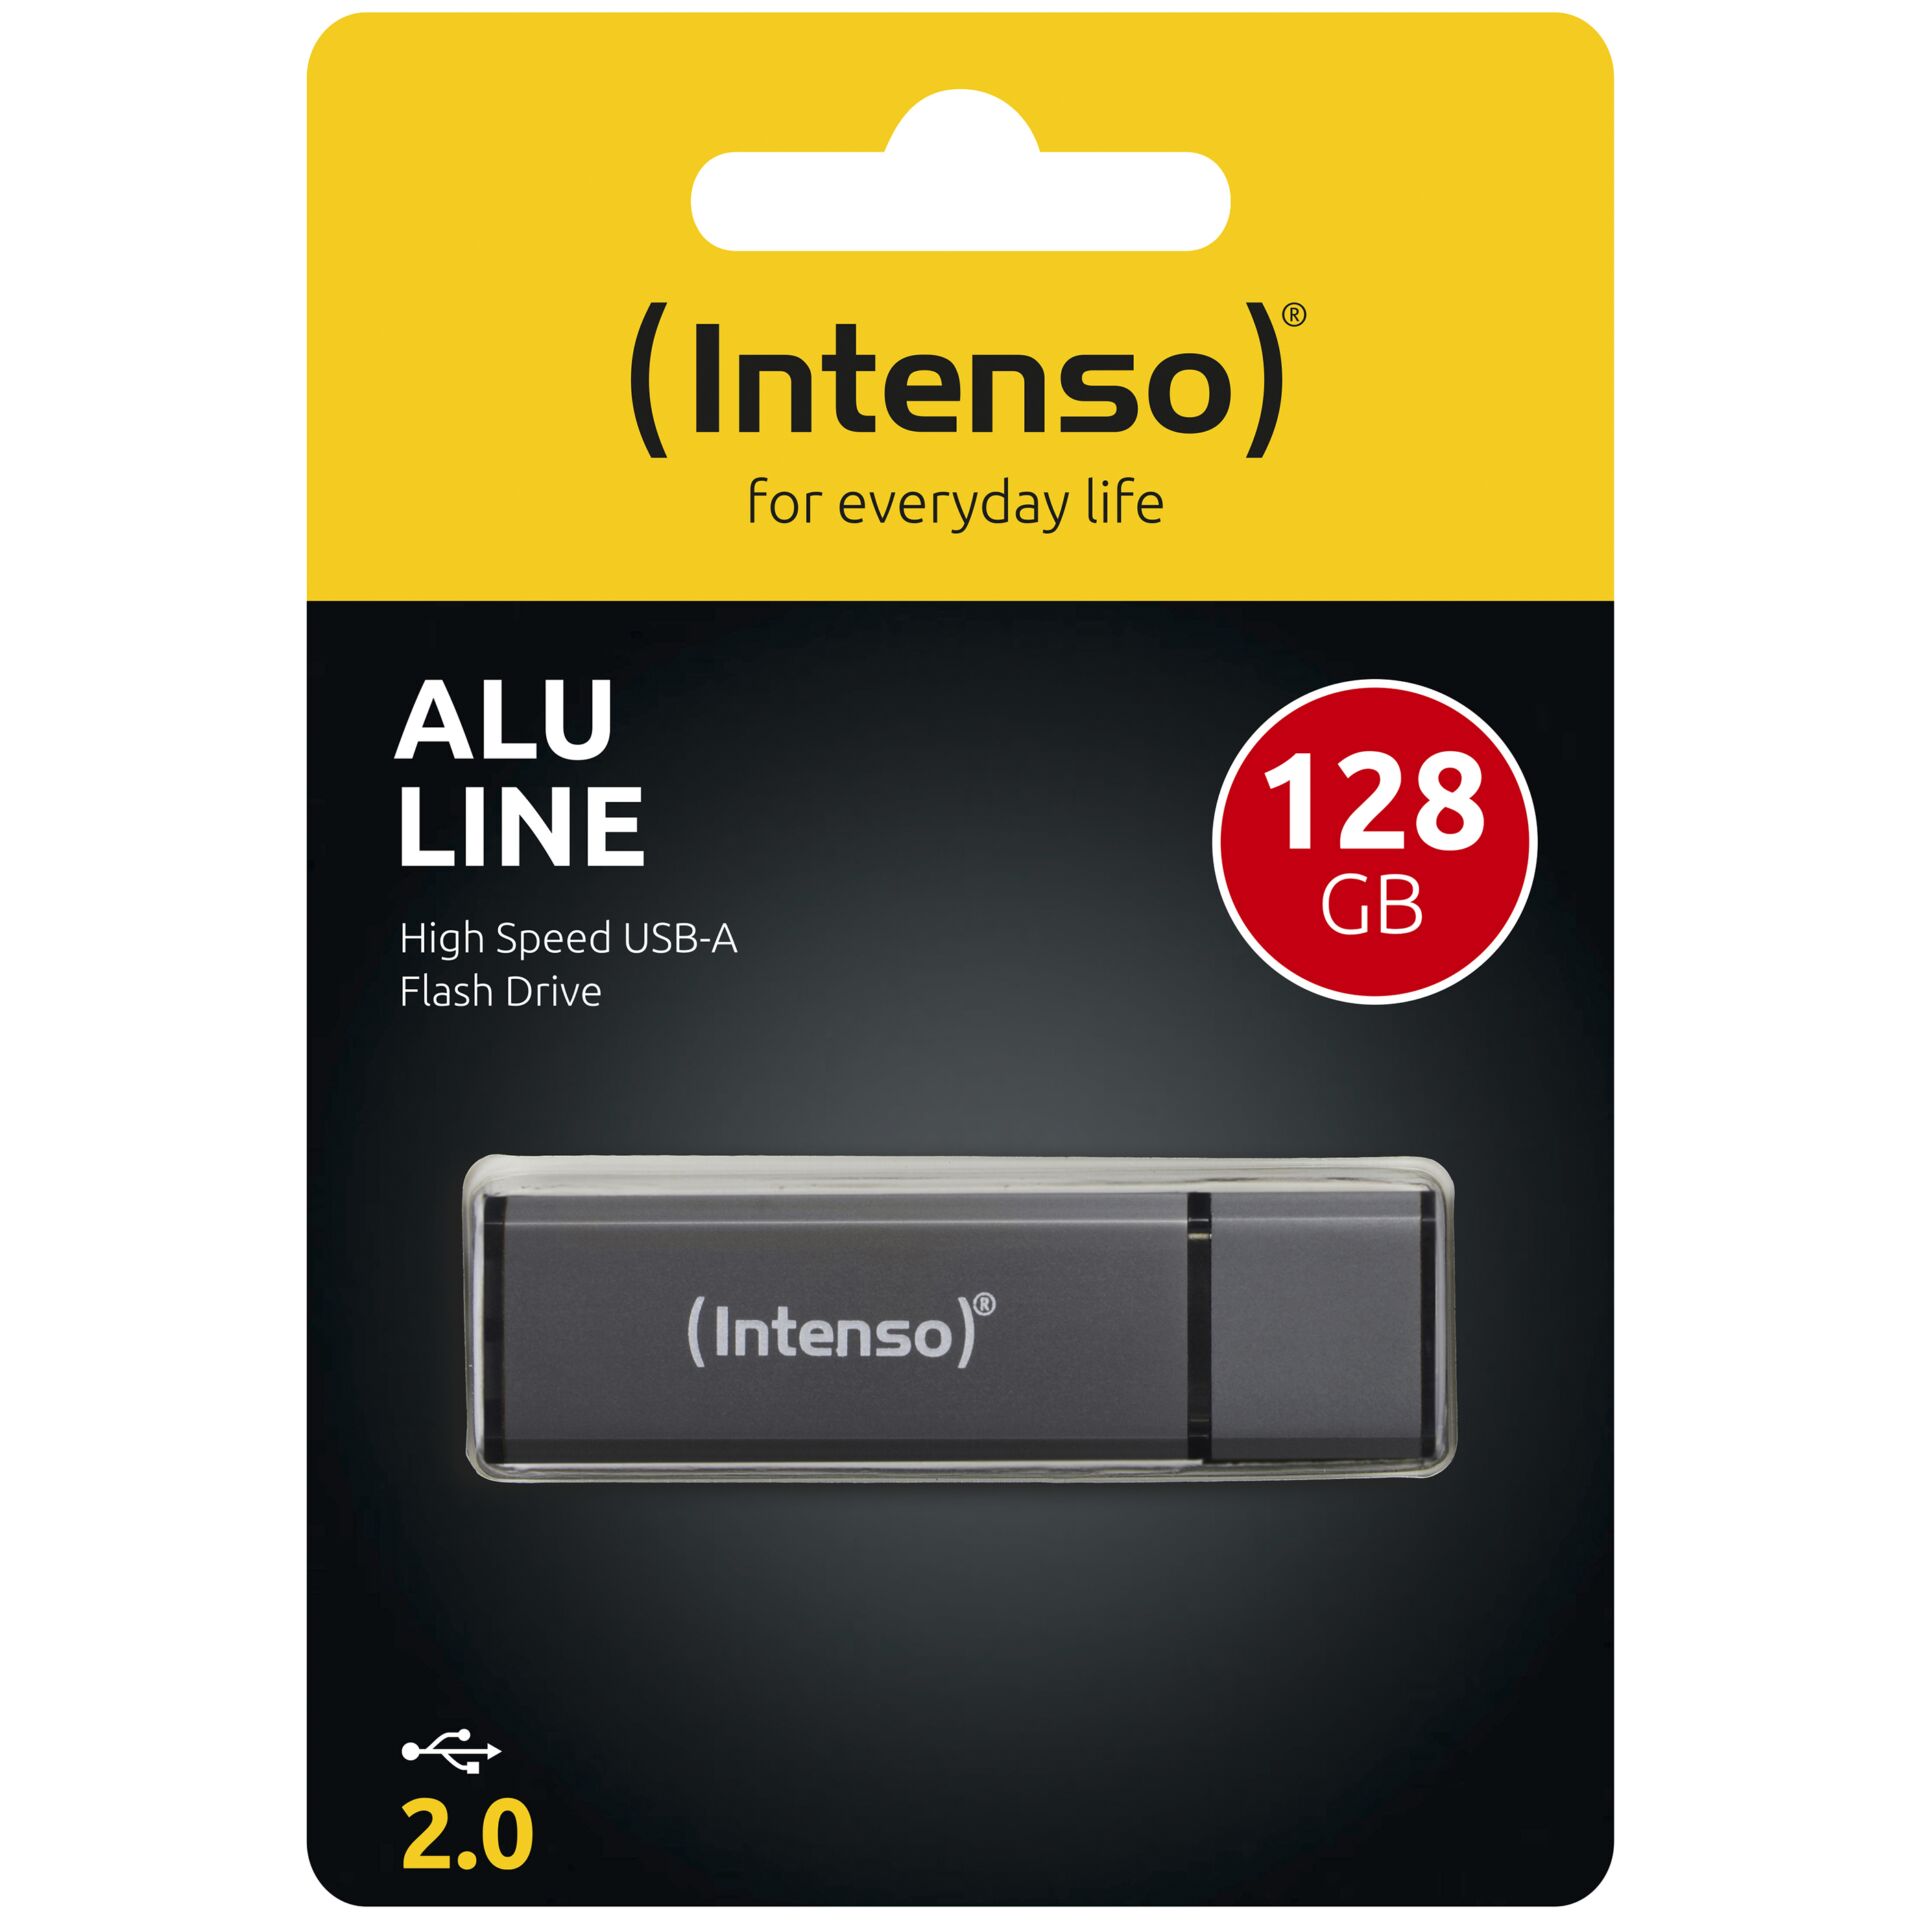 Intenso Alu Line 128GB USB 2.0 anthracite